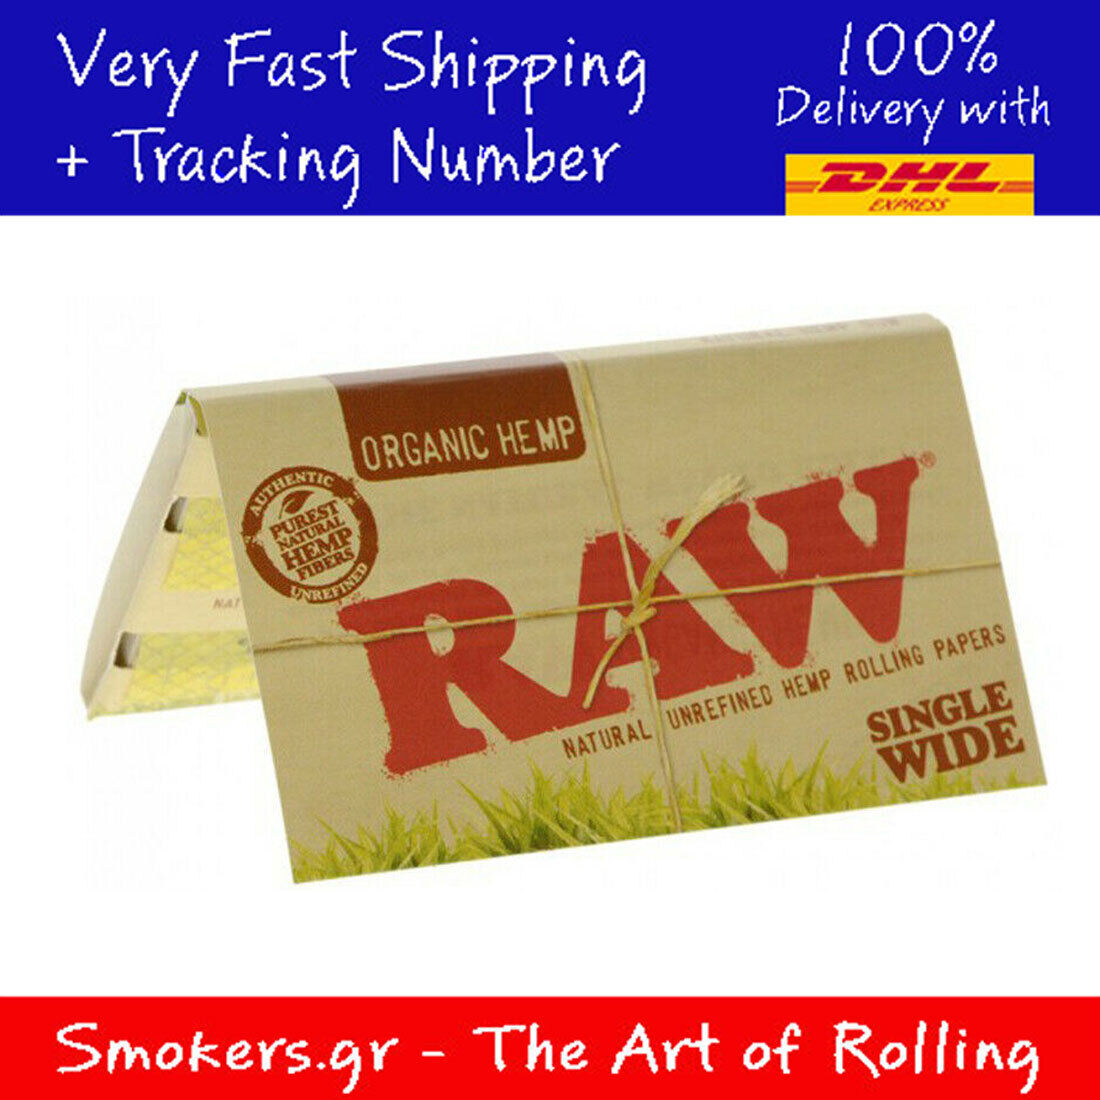 5x Raw Double Single Wide Organic Hemp Cigarette Rolling Paper (500 sheets)